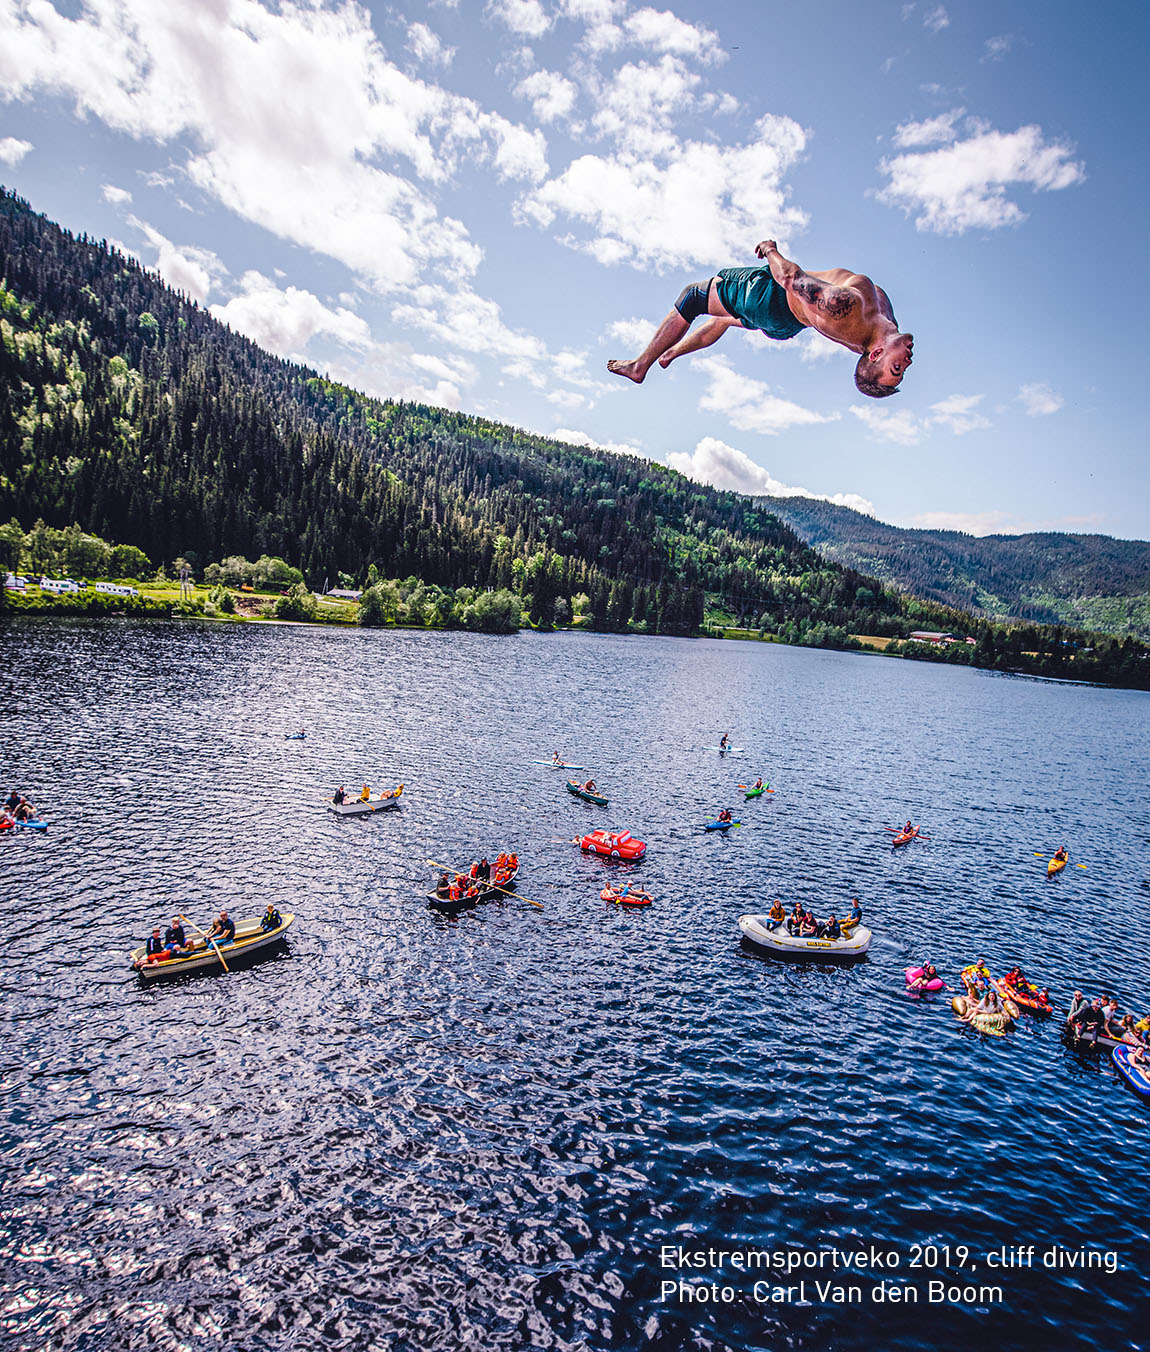 Ekstremsportveko: A festival combining extreme sports, music and family-friendly fun